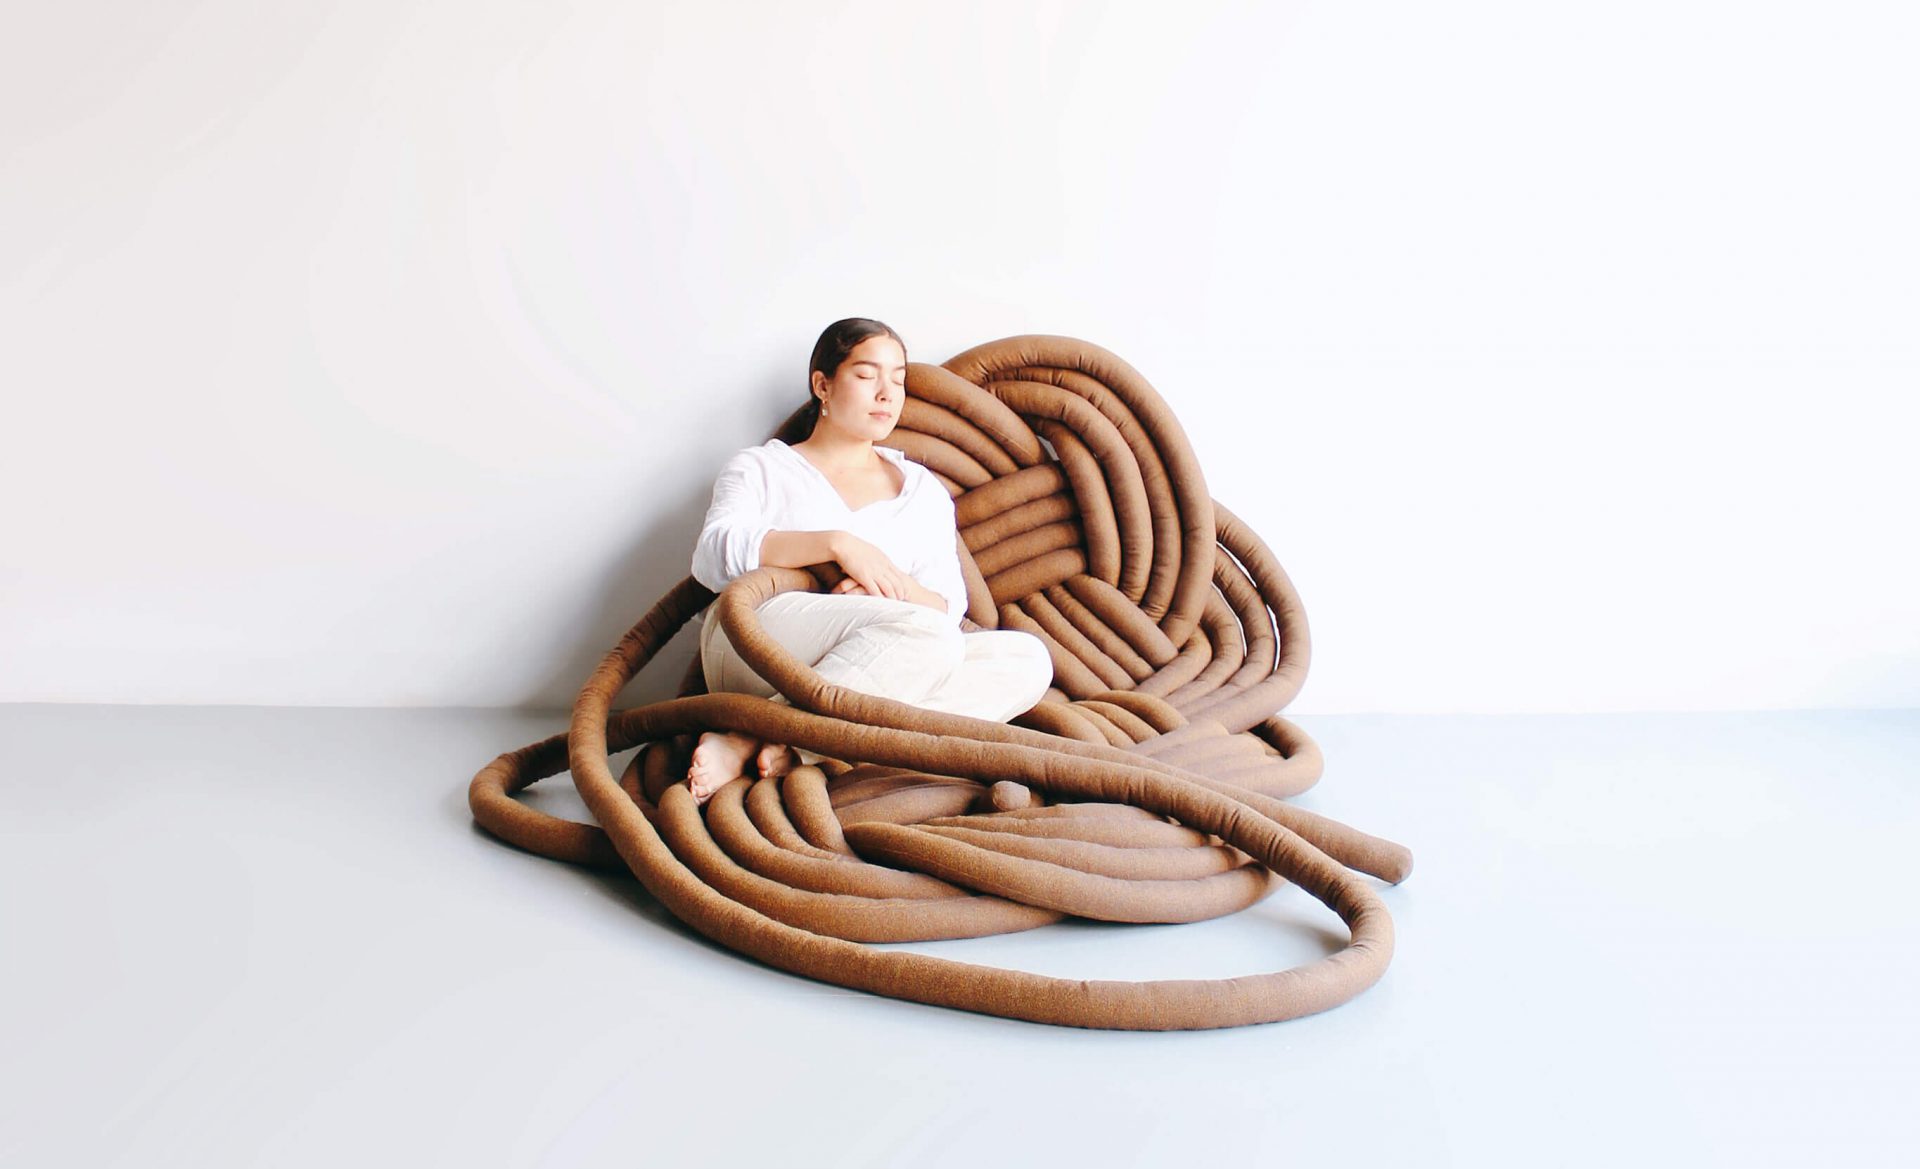 Seok-hyeon Yoon designed Relaxing Configuration